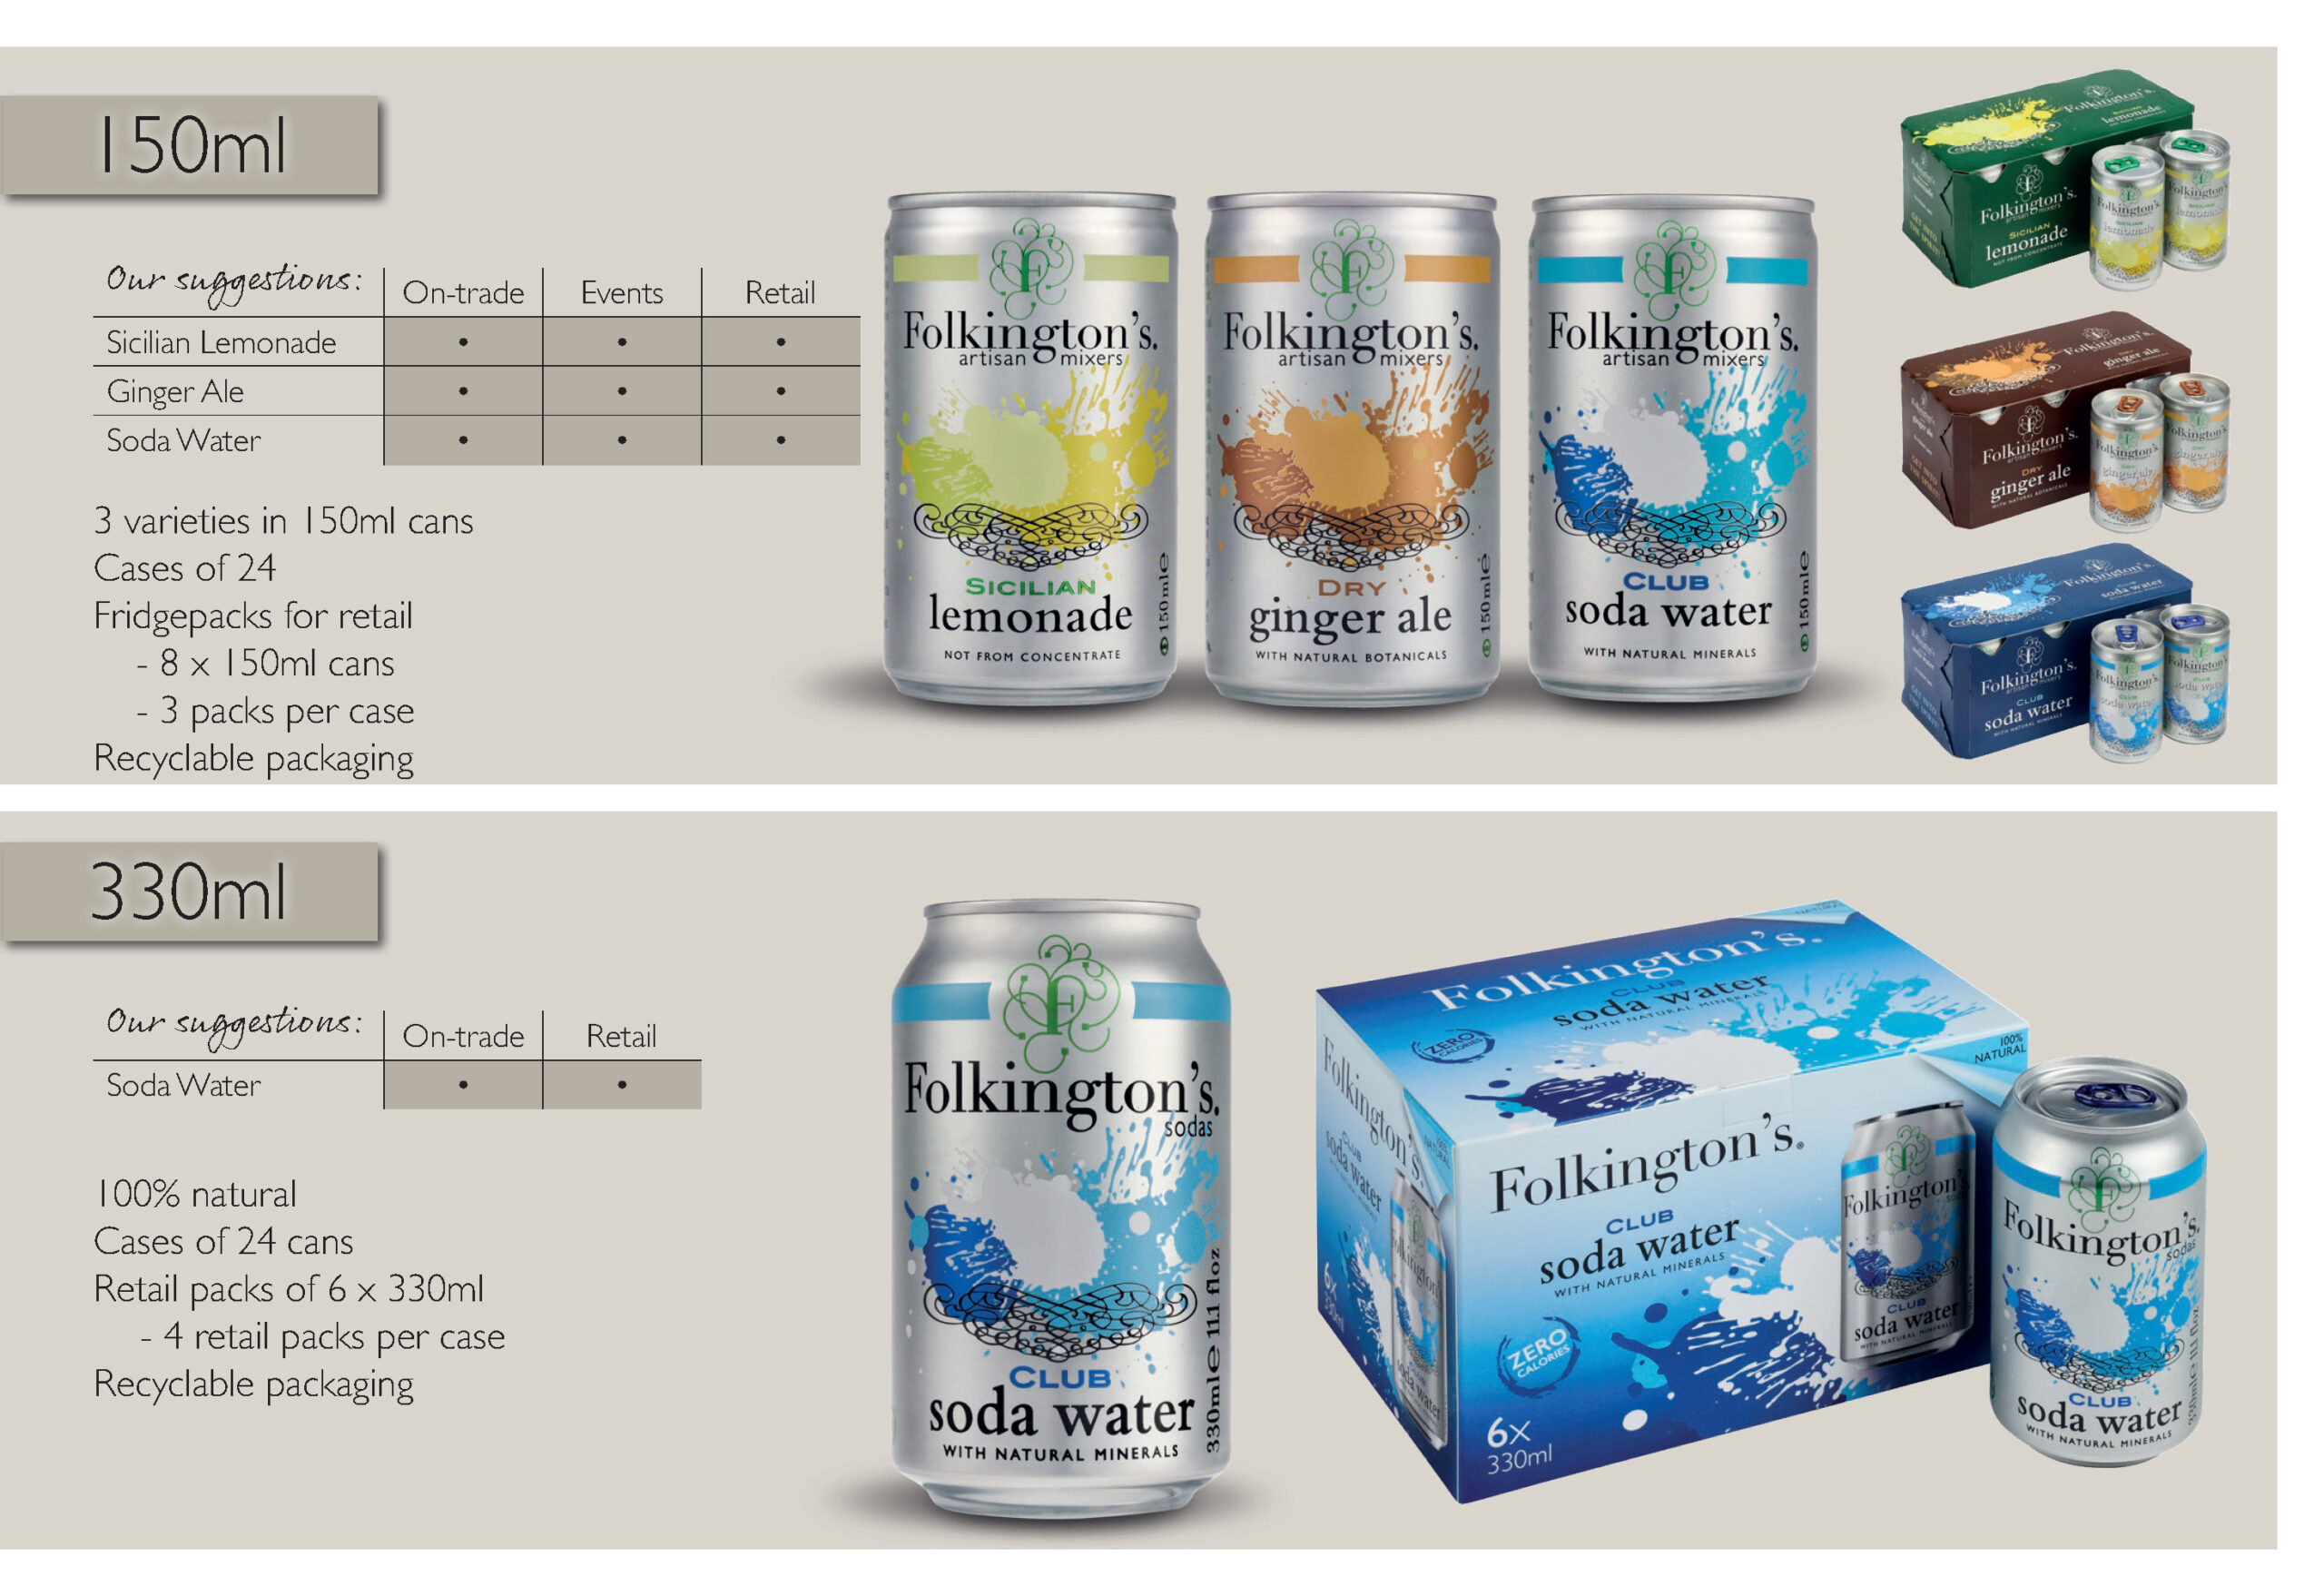 Product: Folkington's Authentic Juices & Mixers